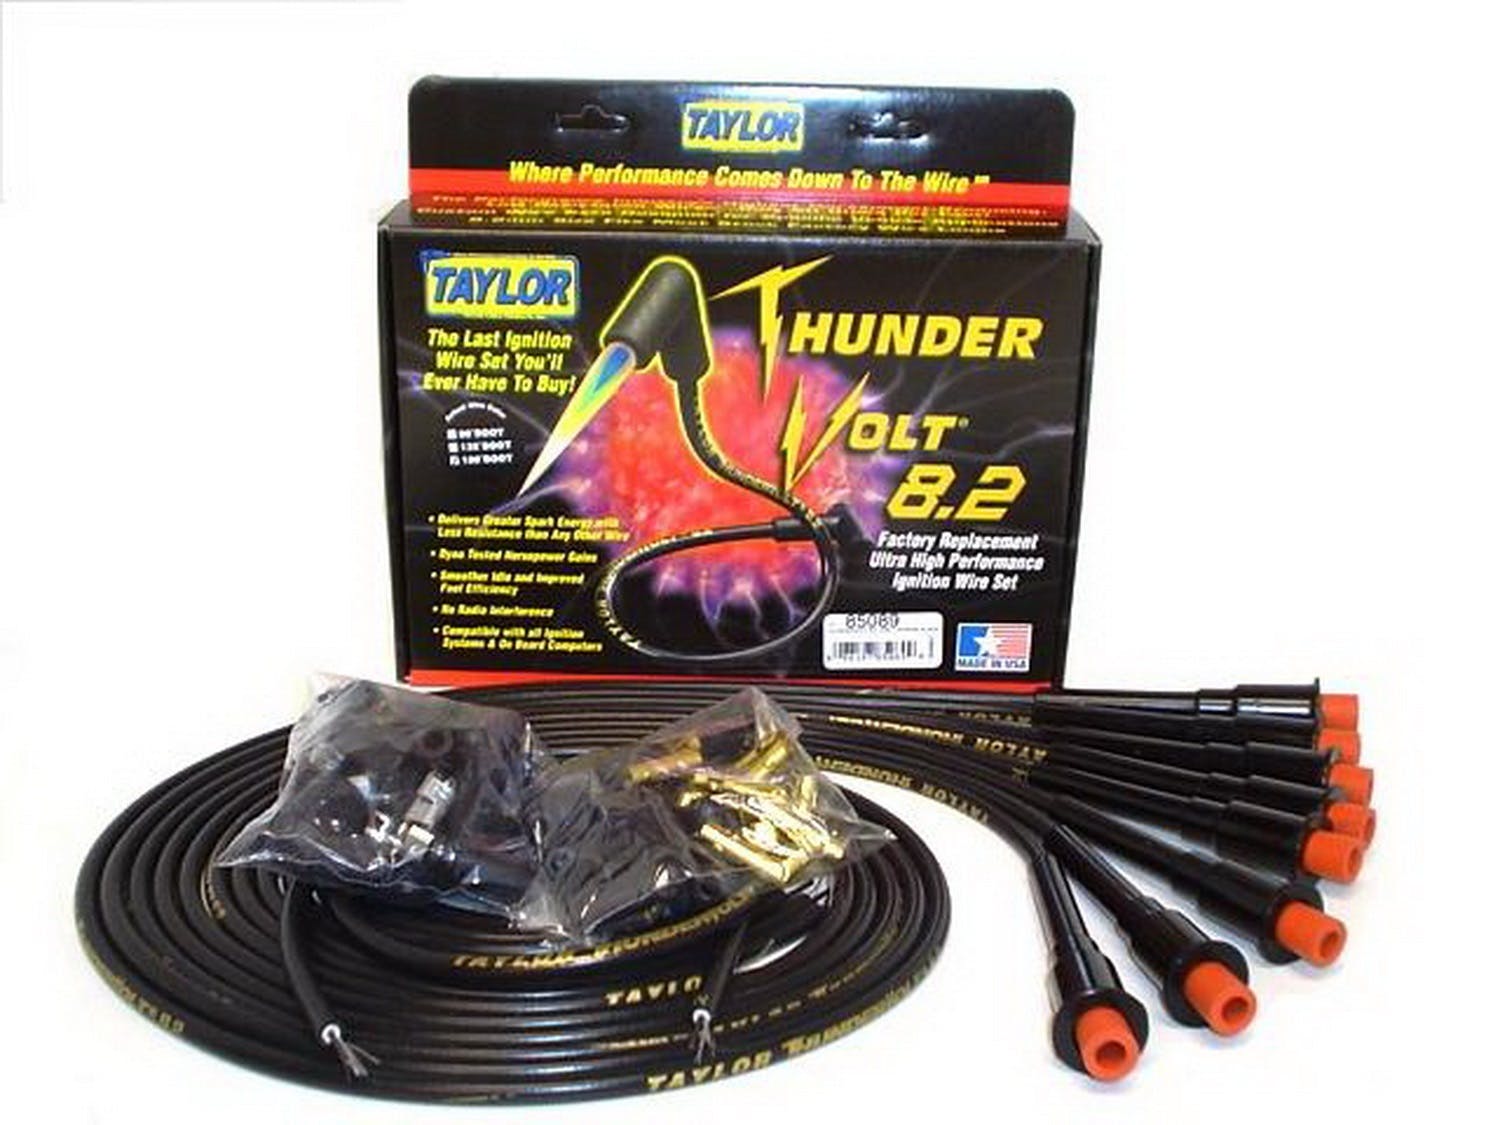 Taylor Cable Products 85089 Thundervolt 8.2 univ Hemi 8 cyl black